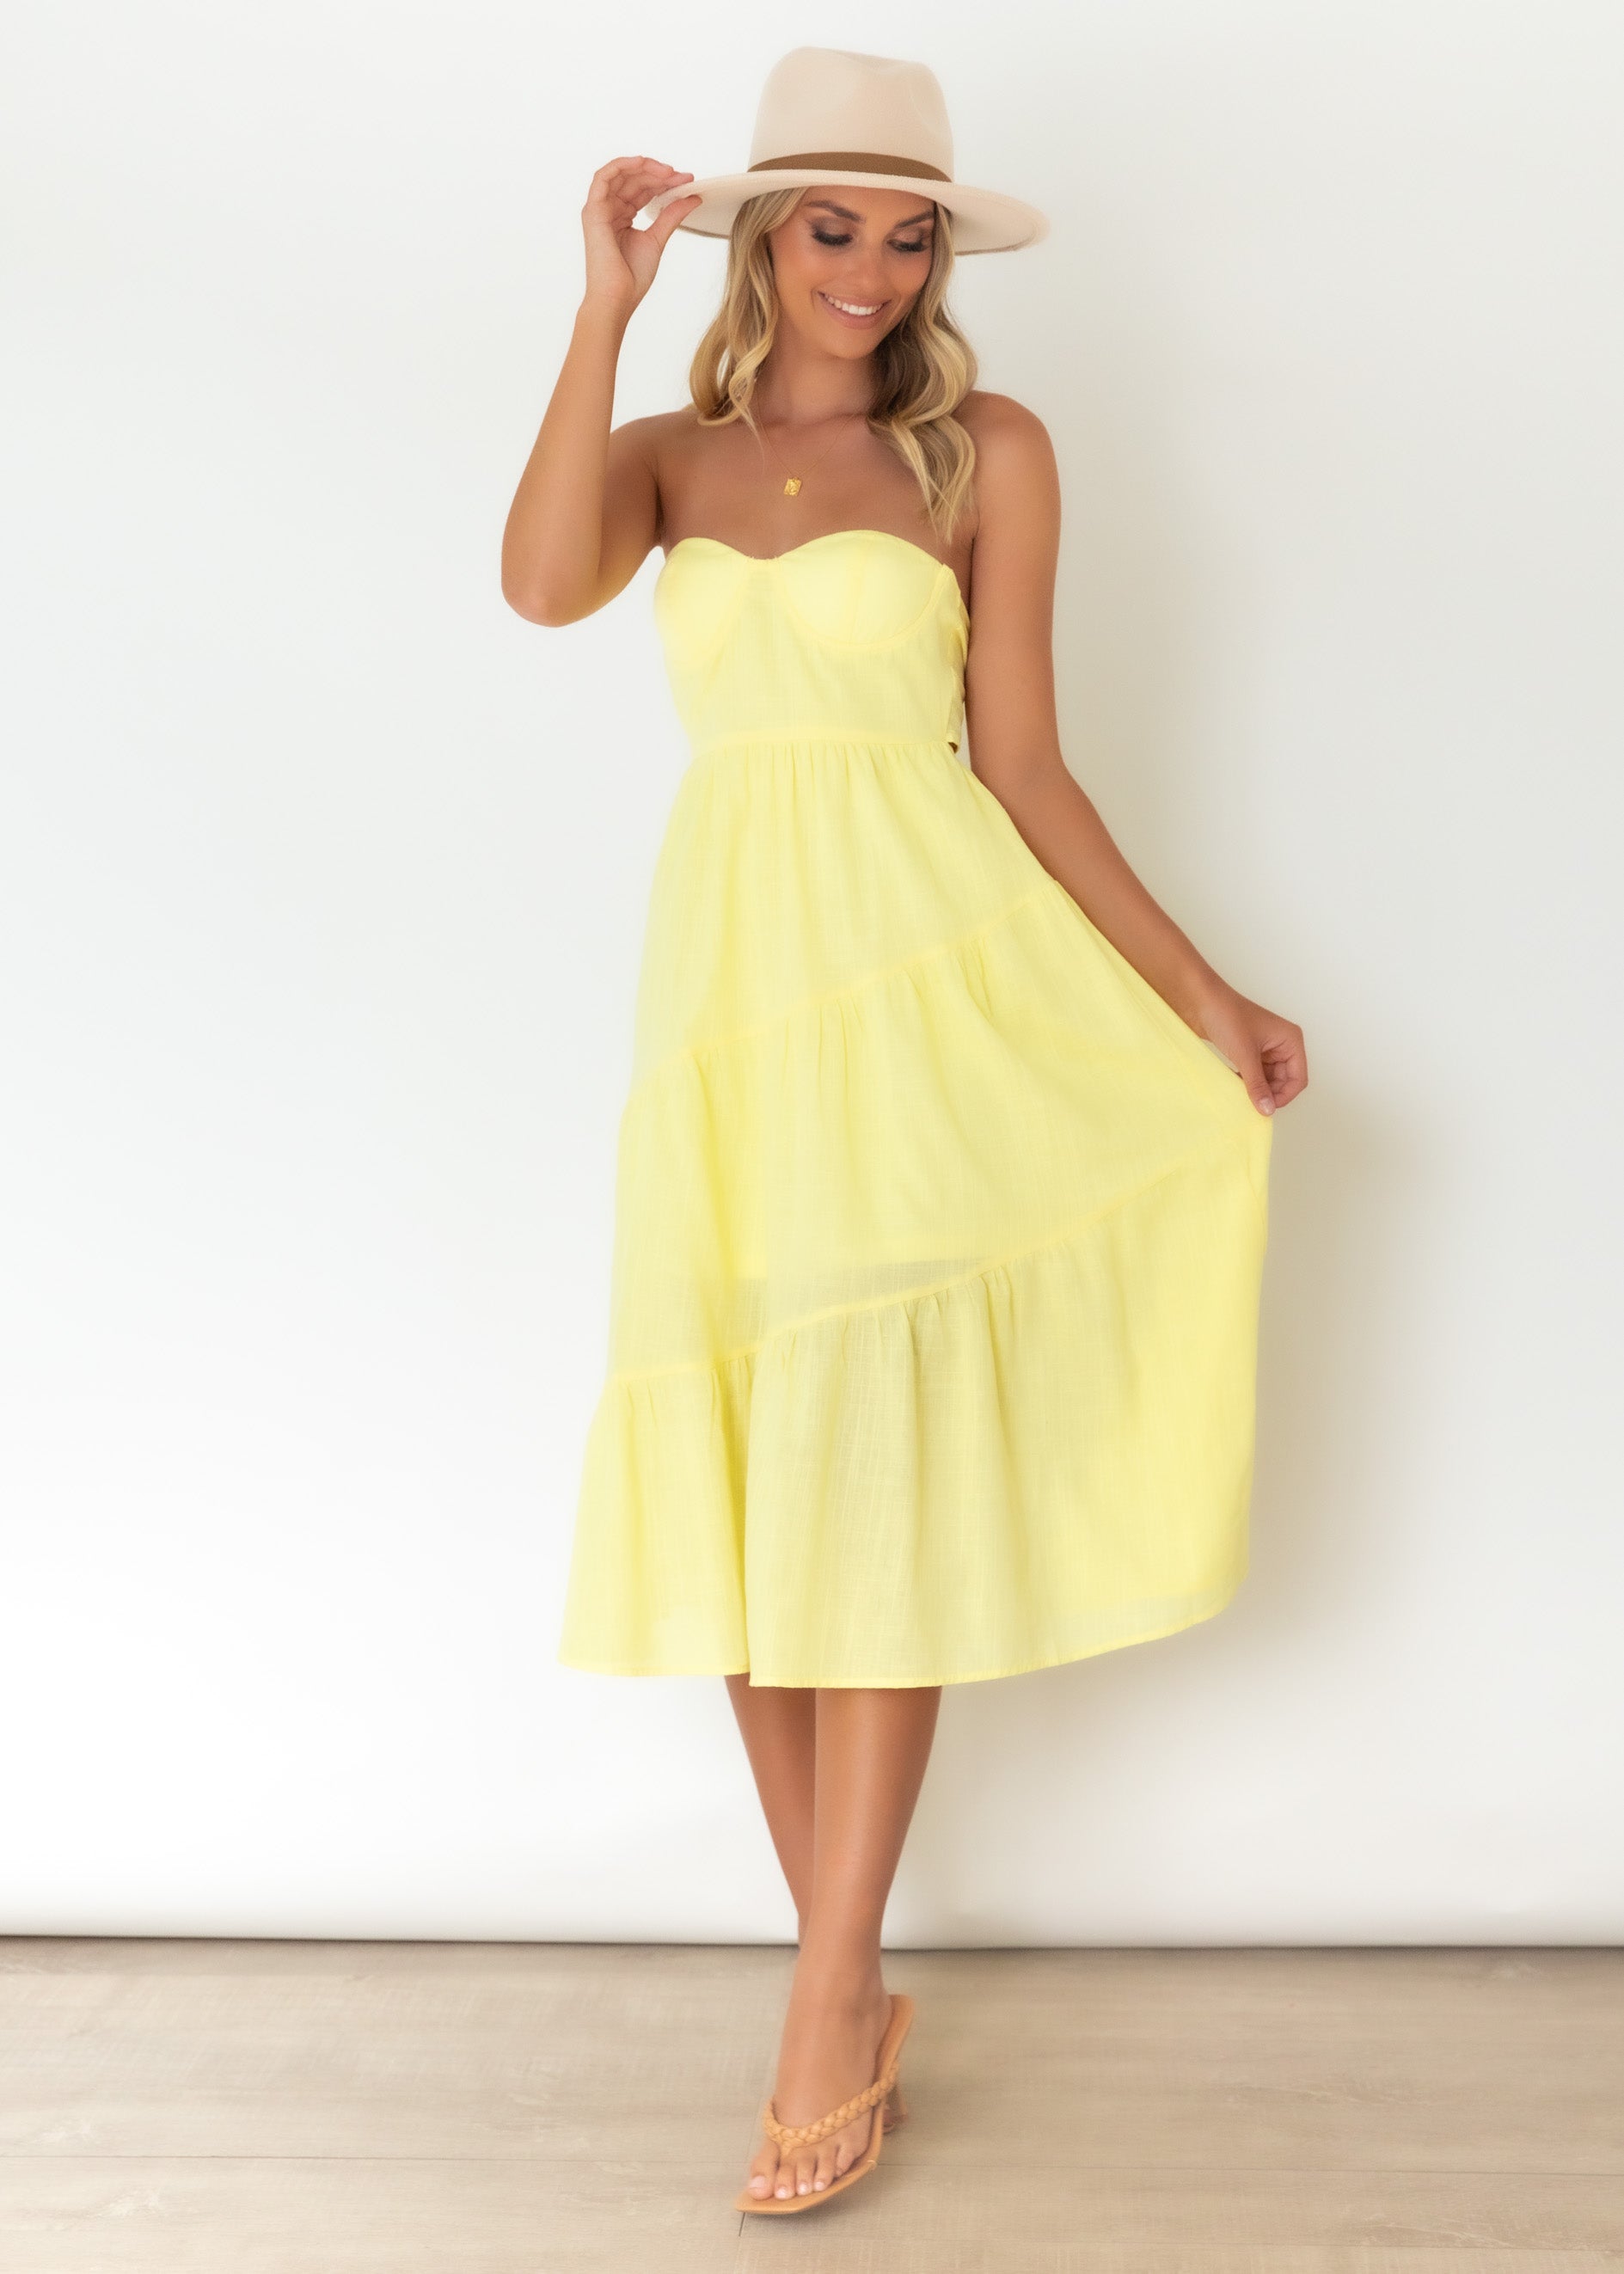 Salome Strapless Maxi Dress - Lemon